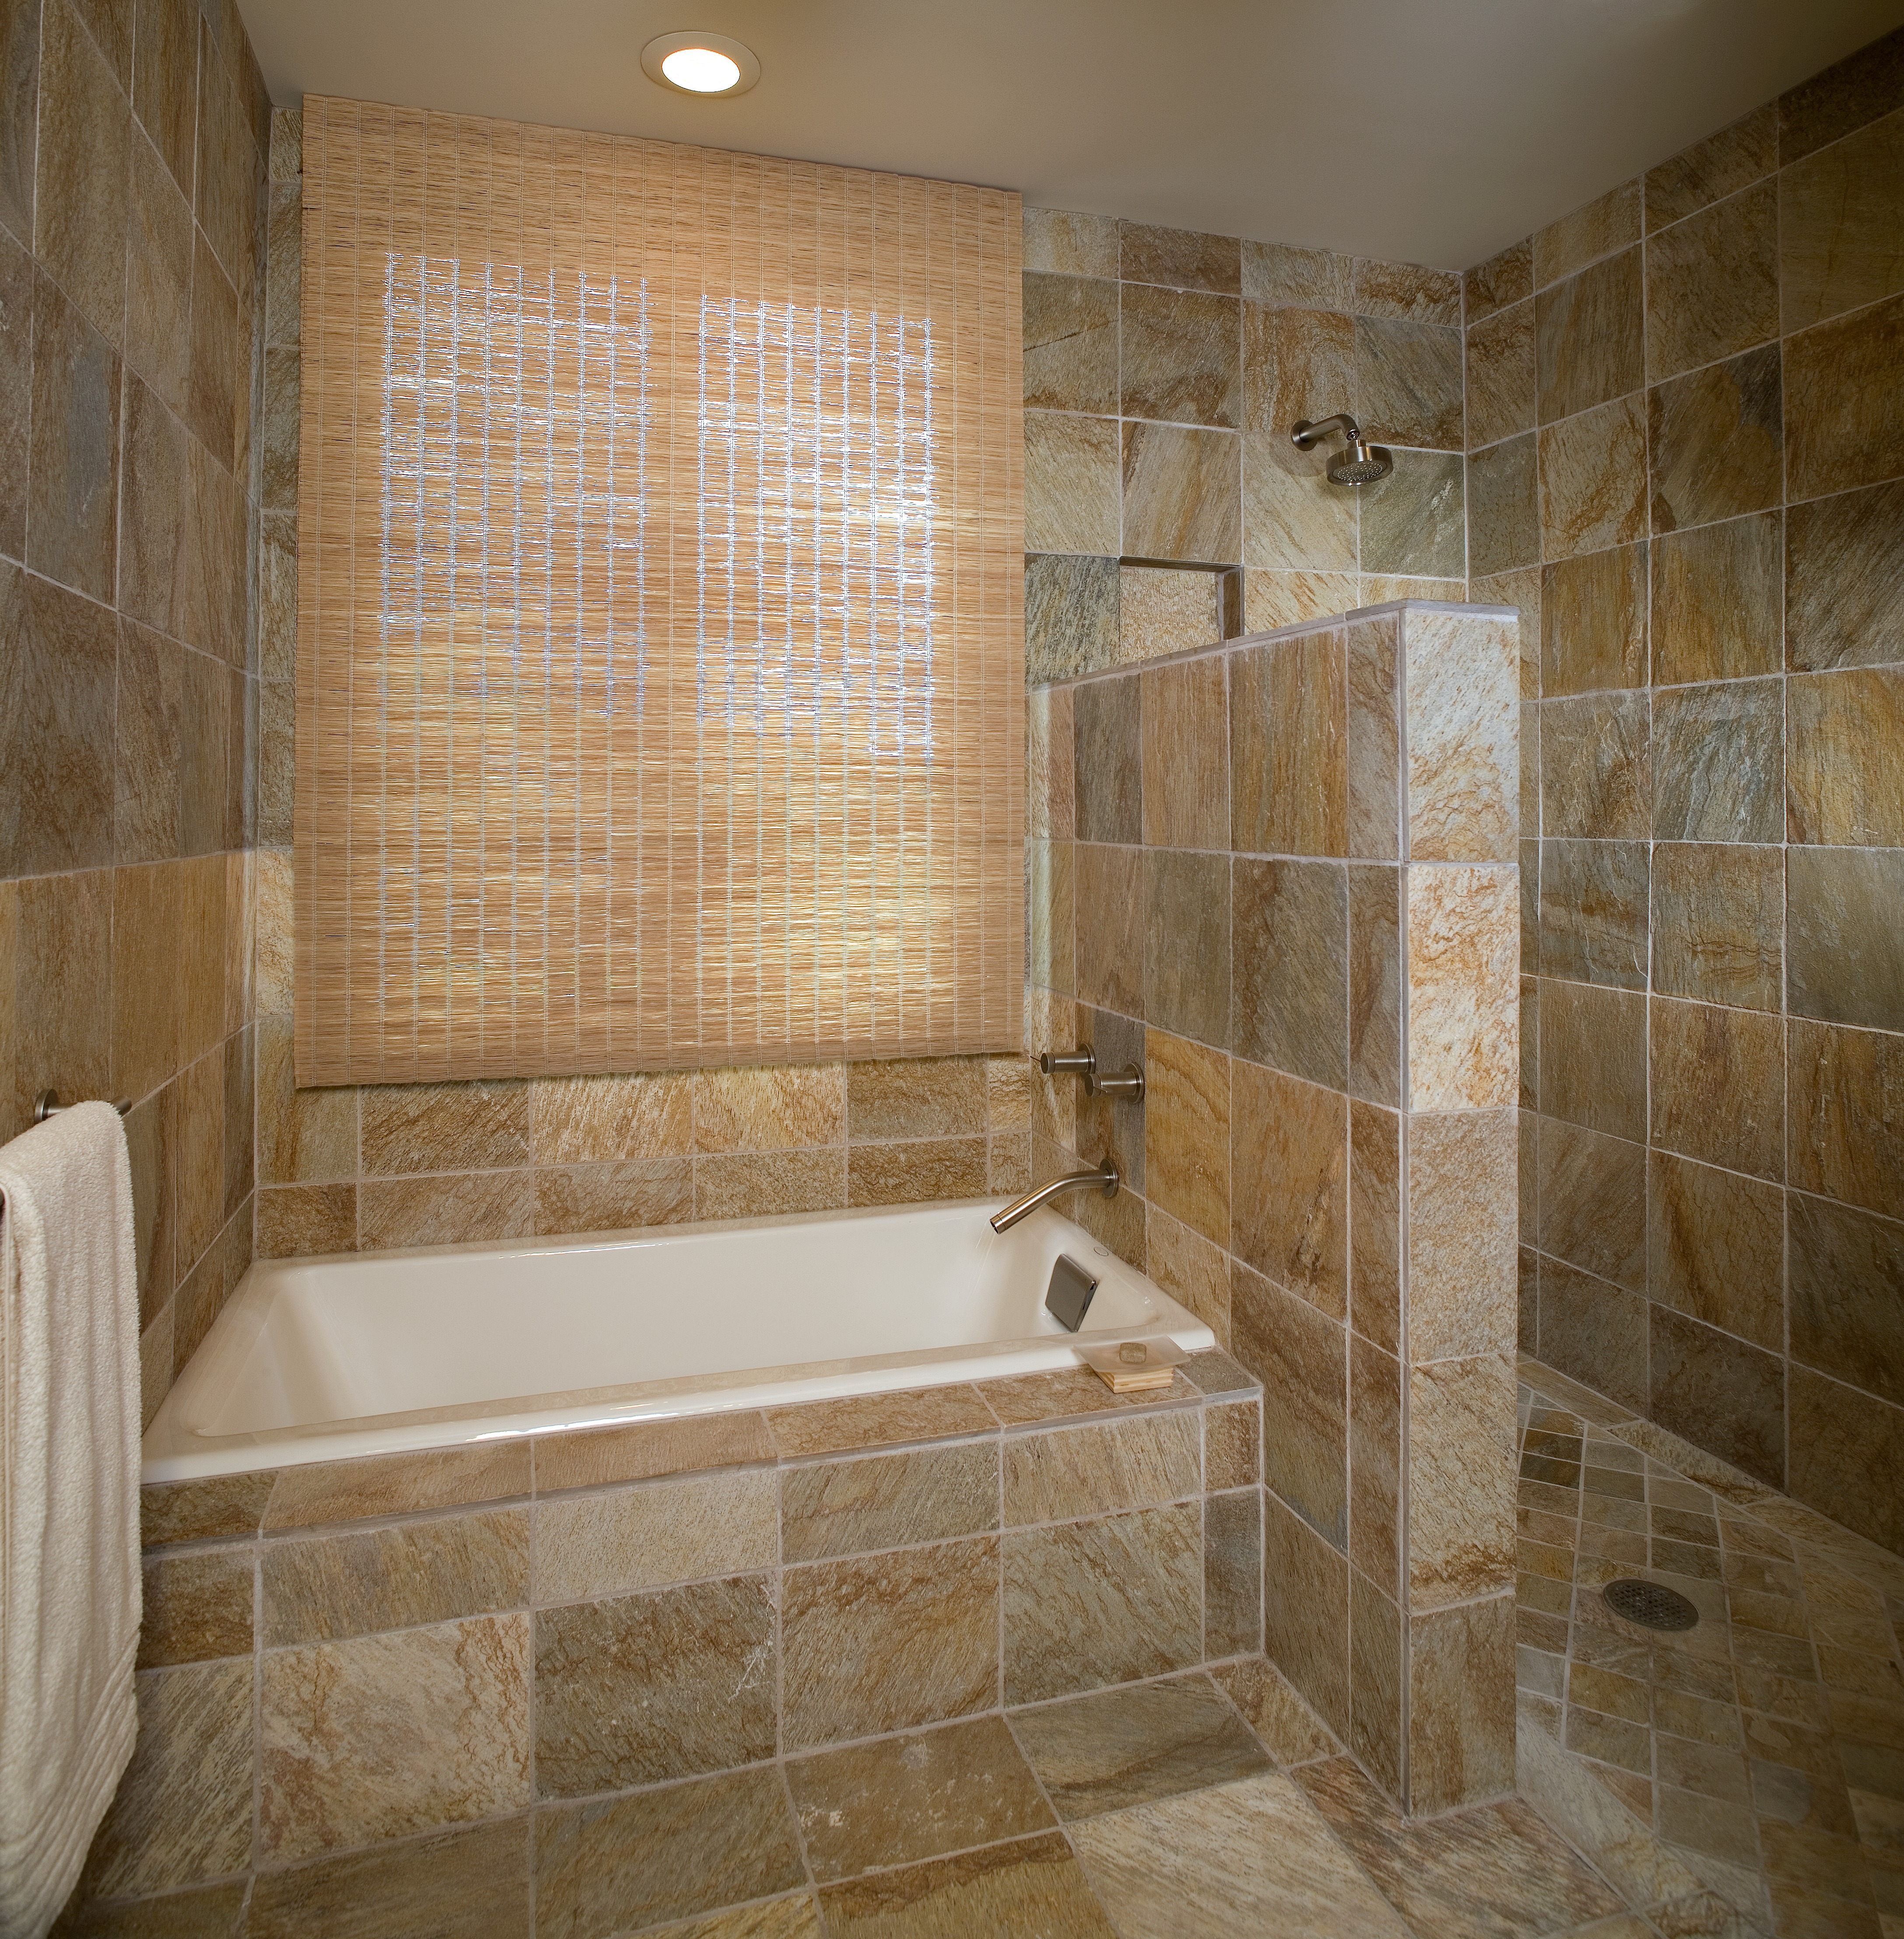 What\u002639;s Trending in Bathroom Remodels? Homeowners Count on Pros